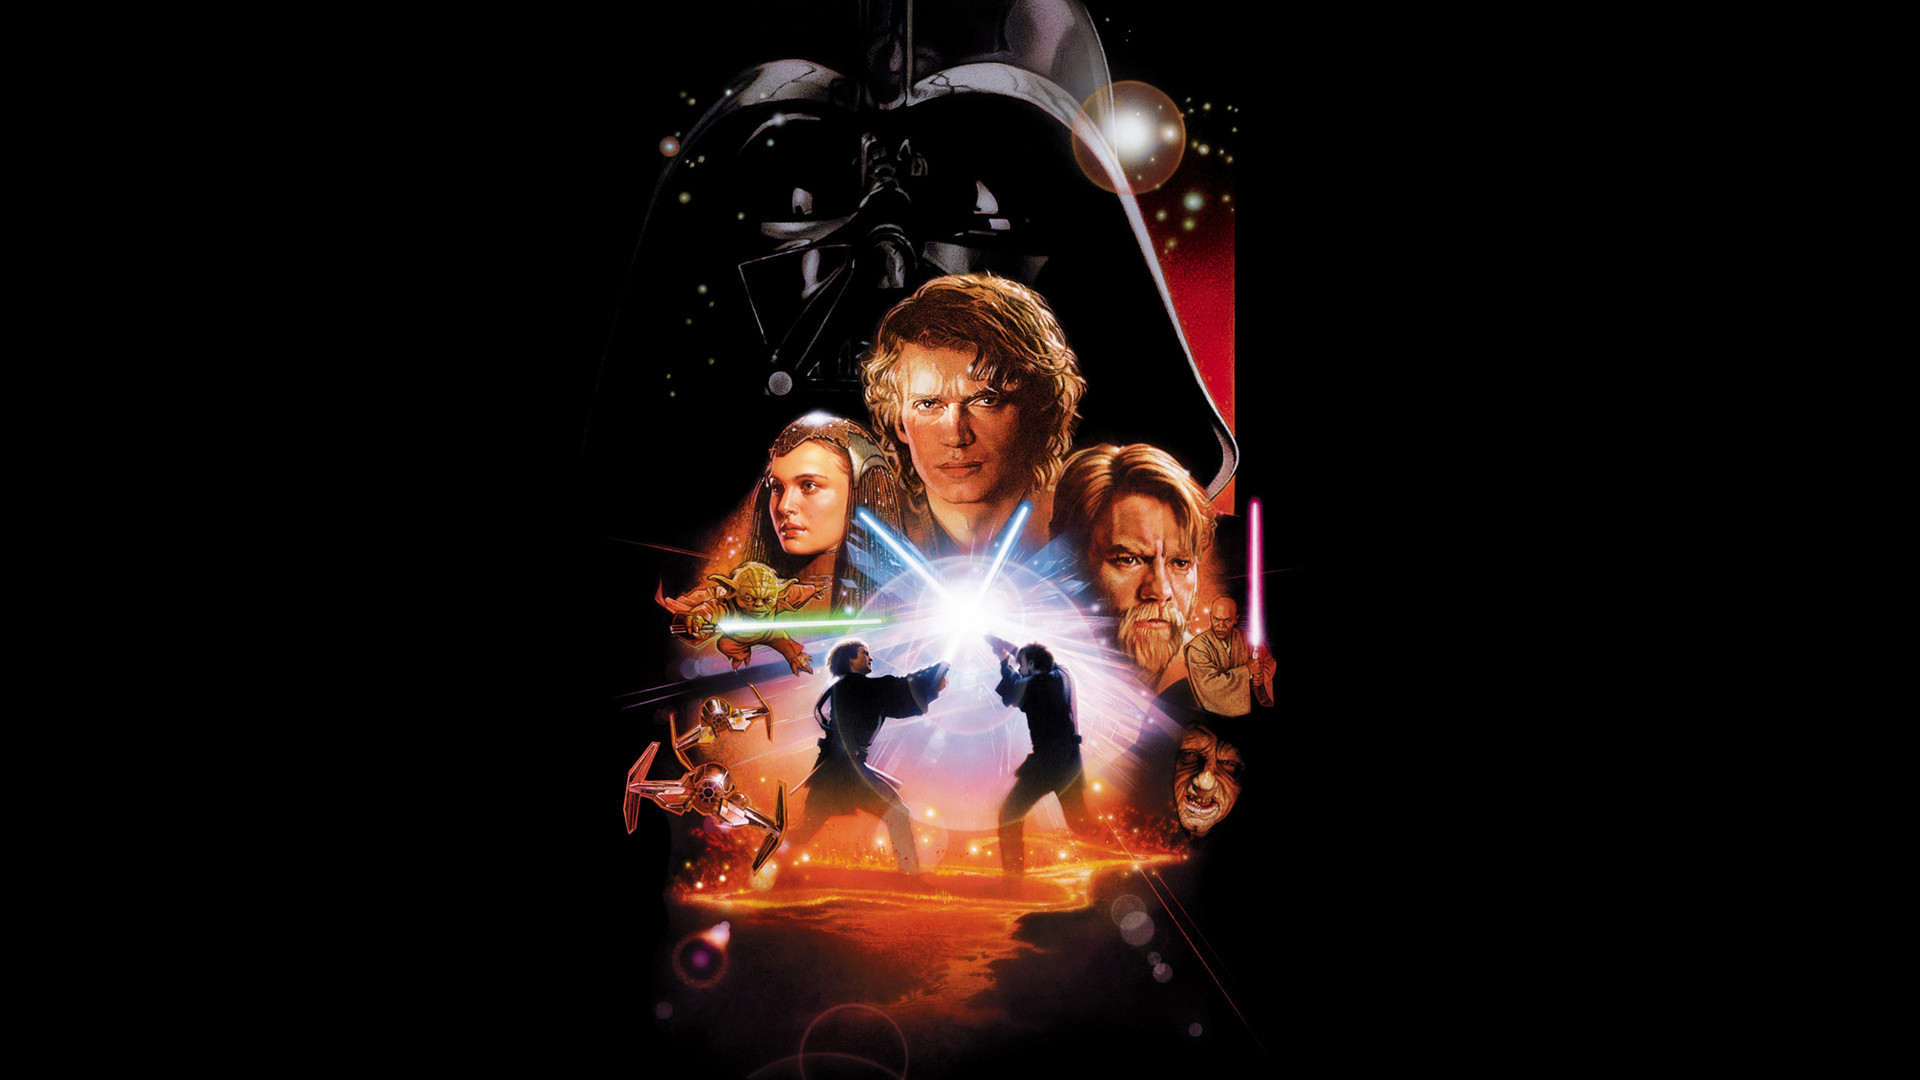 1920x1080 Star Wars Episode III: Revenge of the Sith HD Wallpaper | Hintergrund |   | ID:697959 - Wallpaper Abyss